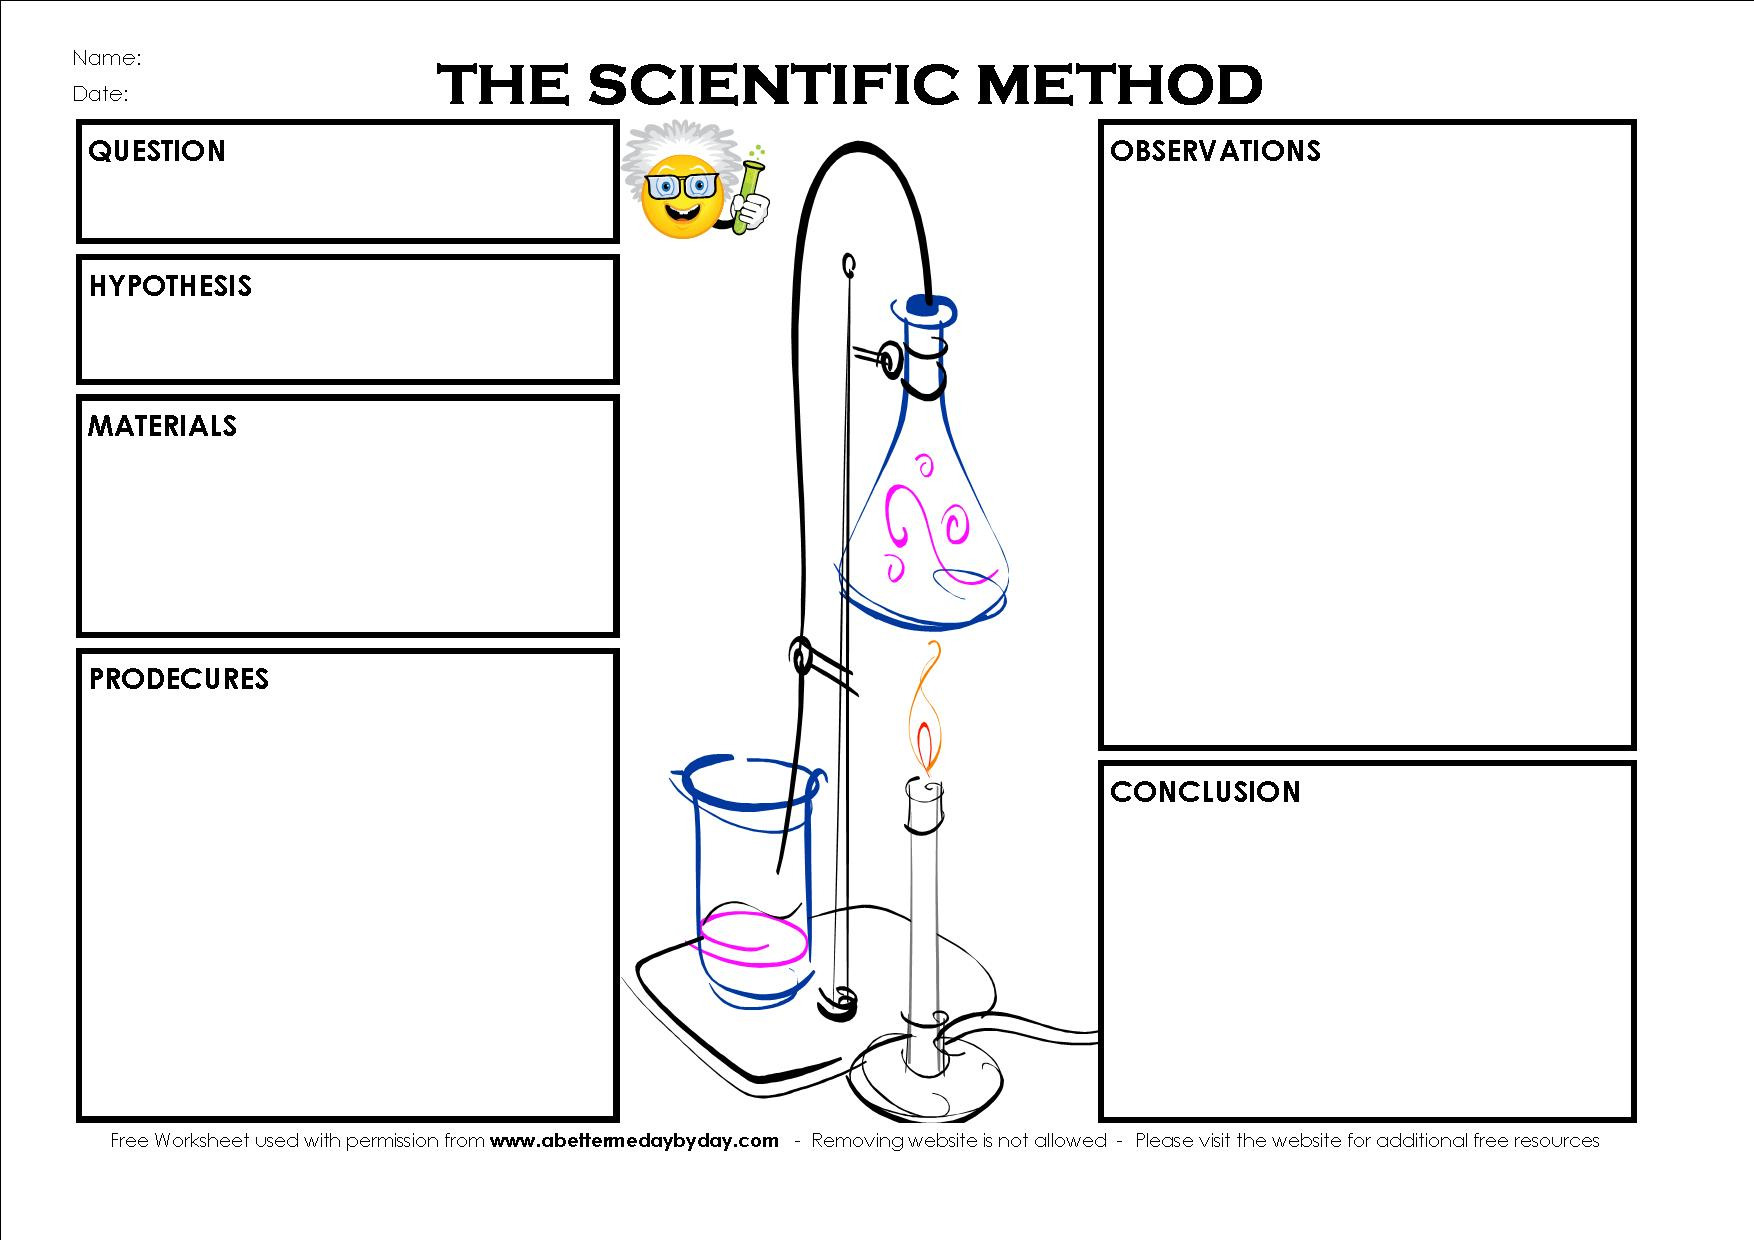 Free Worksheet Elementary Level Scientific Method  A